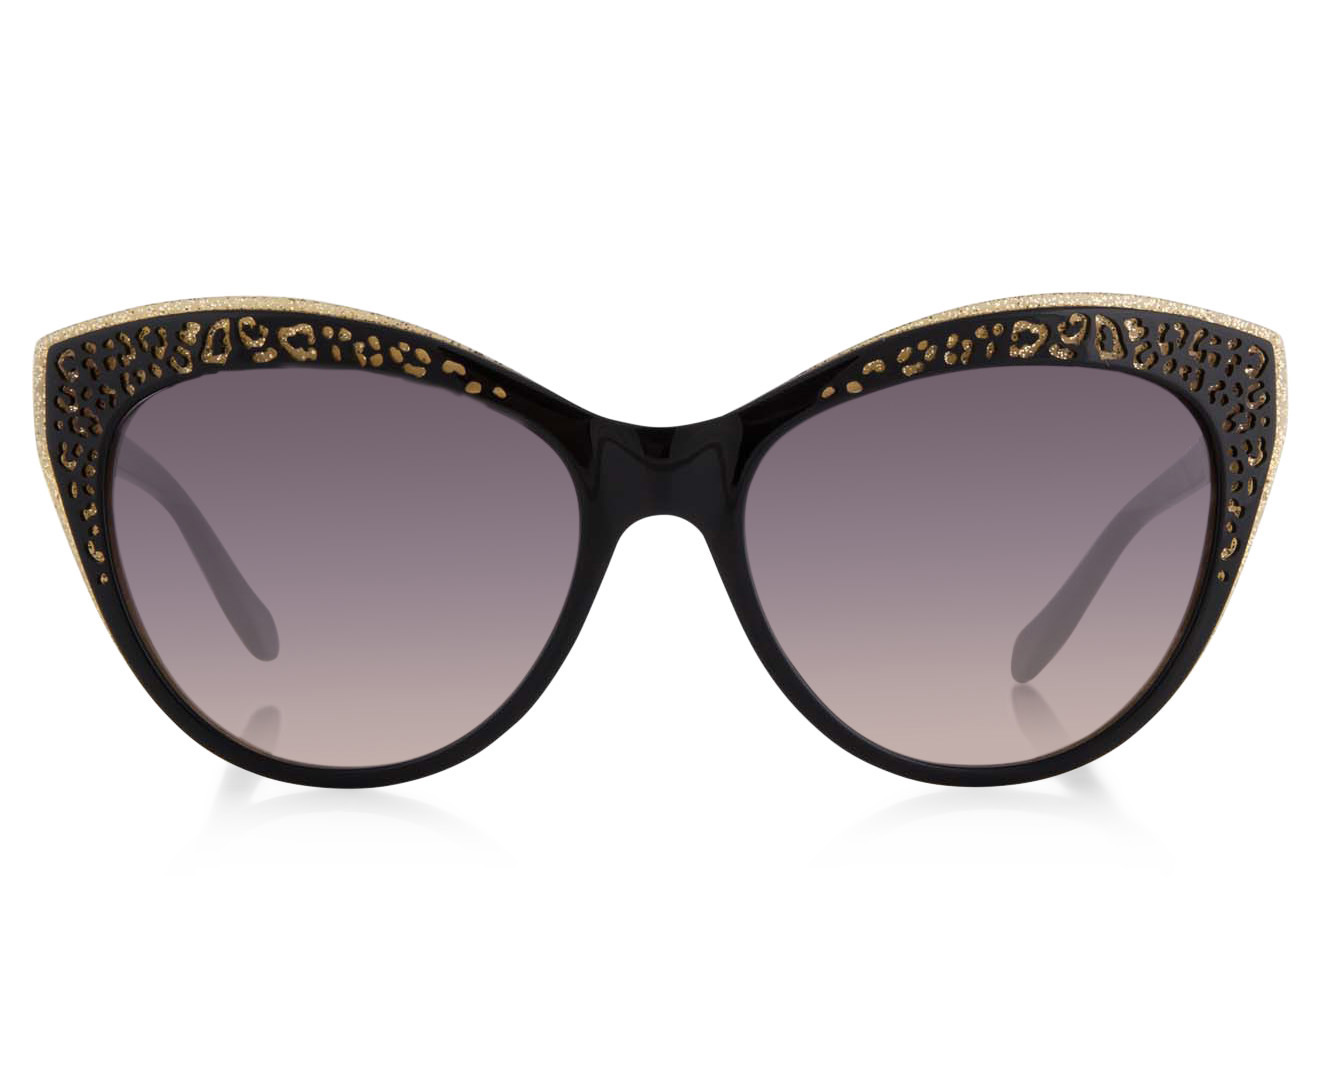 Roberto Cavalli Women's Cat Eye Sunglasses - Black/Gold | eBay